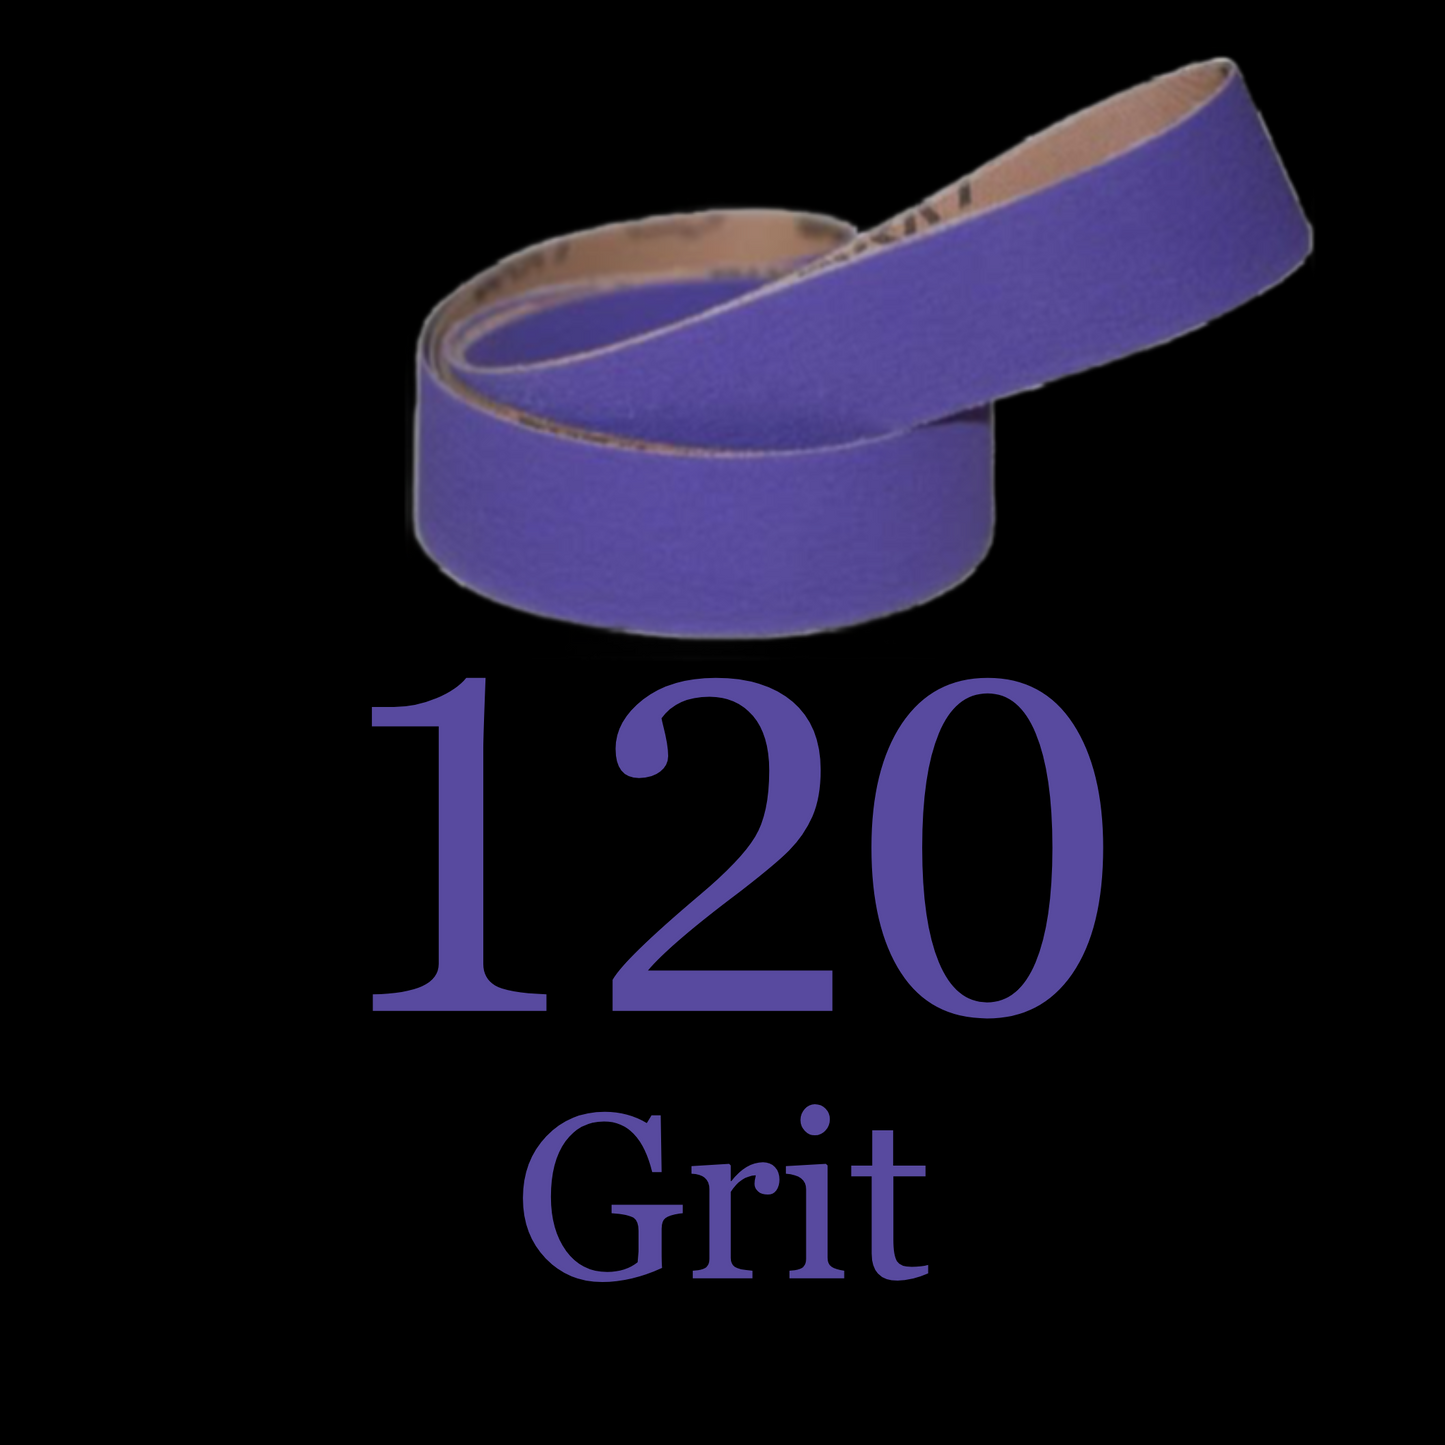 2” x 72” Reglite Premium Ceramic Belts 120 Grit